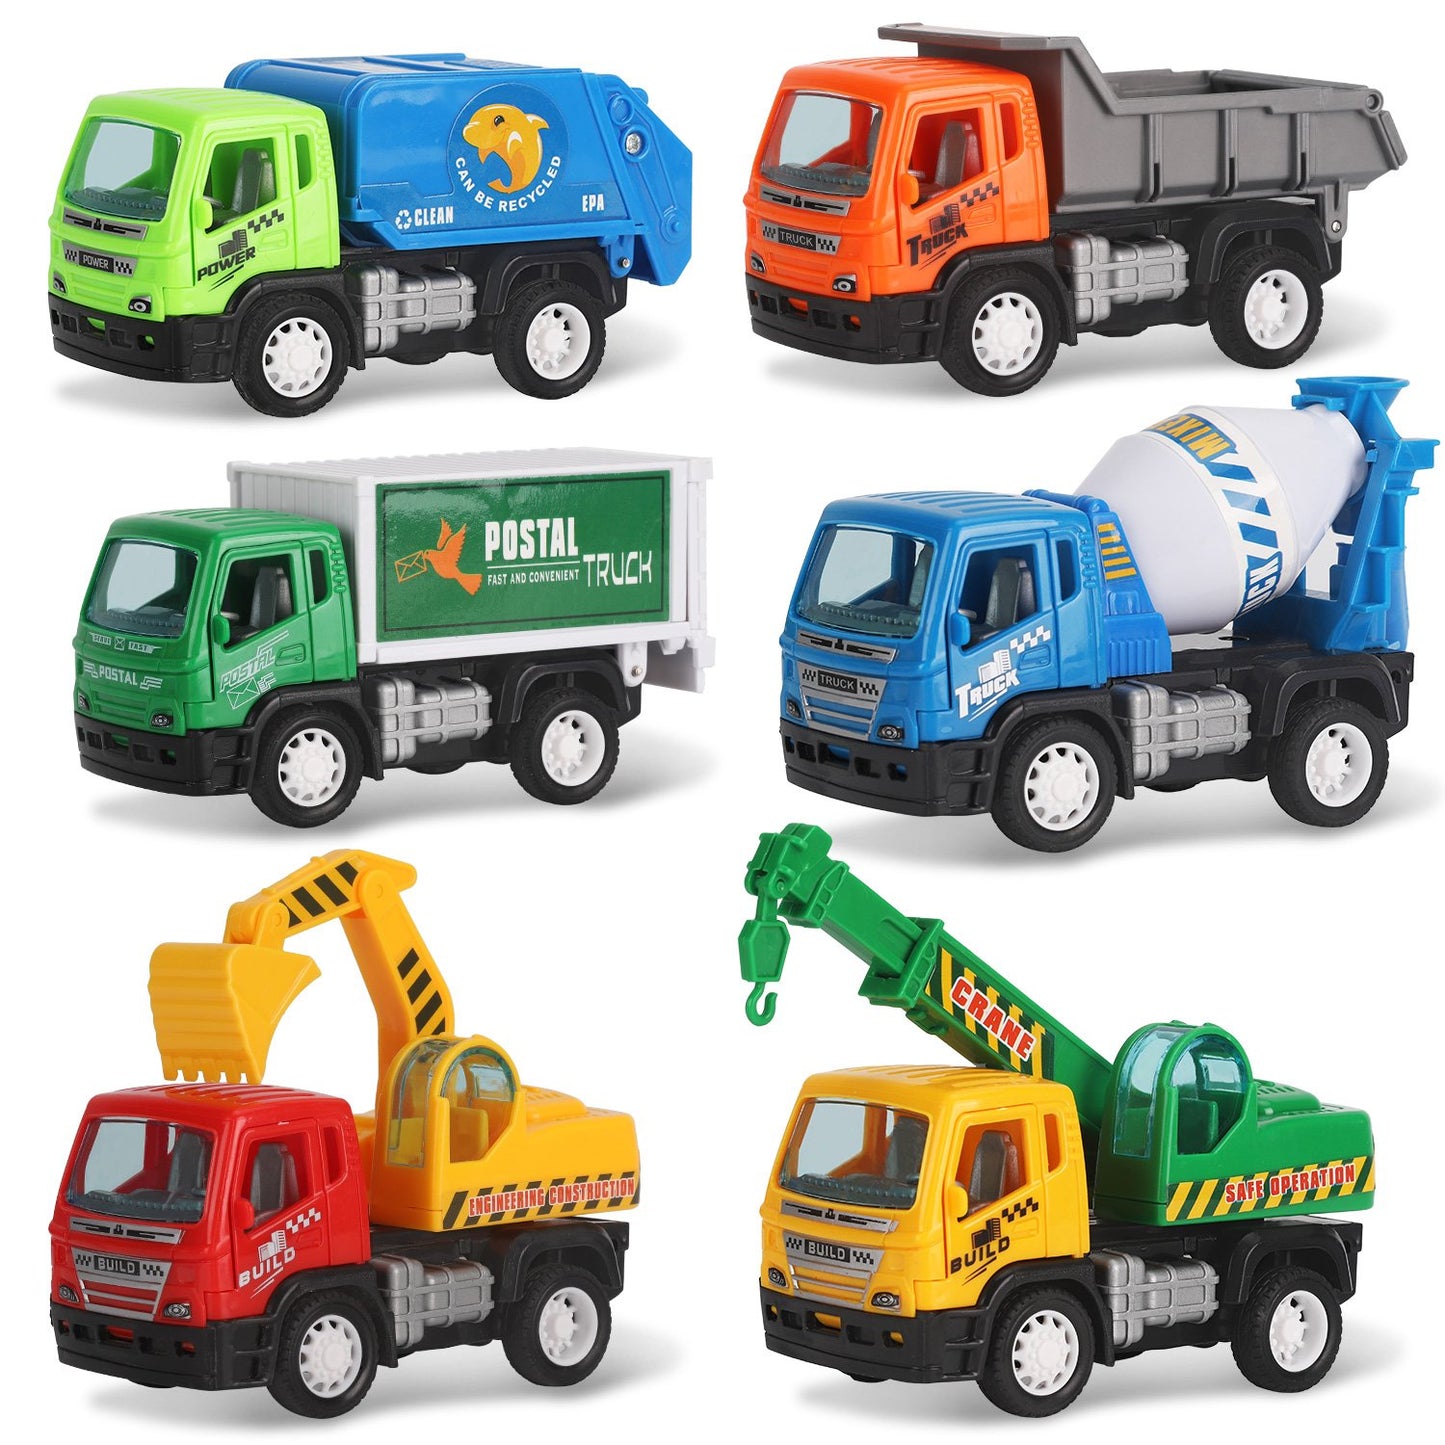 Set of 6 Pullback City Builder Construction Vehicles for Kids - Dump Truck, Cement Mixer, Garbage Truck, Excavator, Crane, Postal Truck